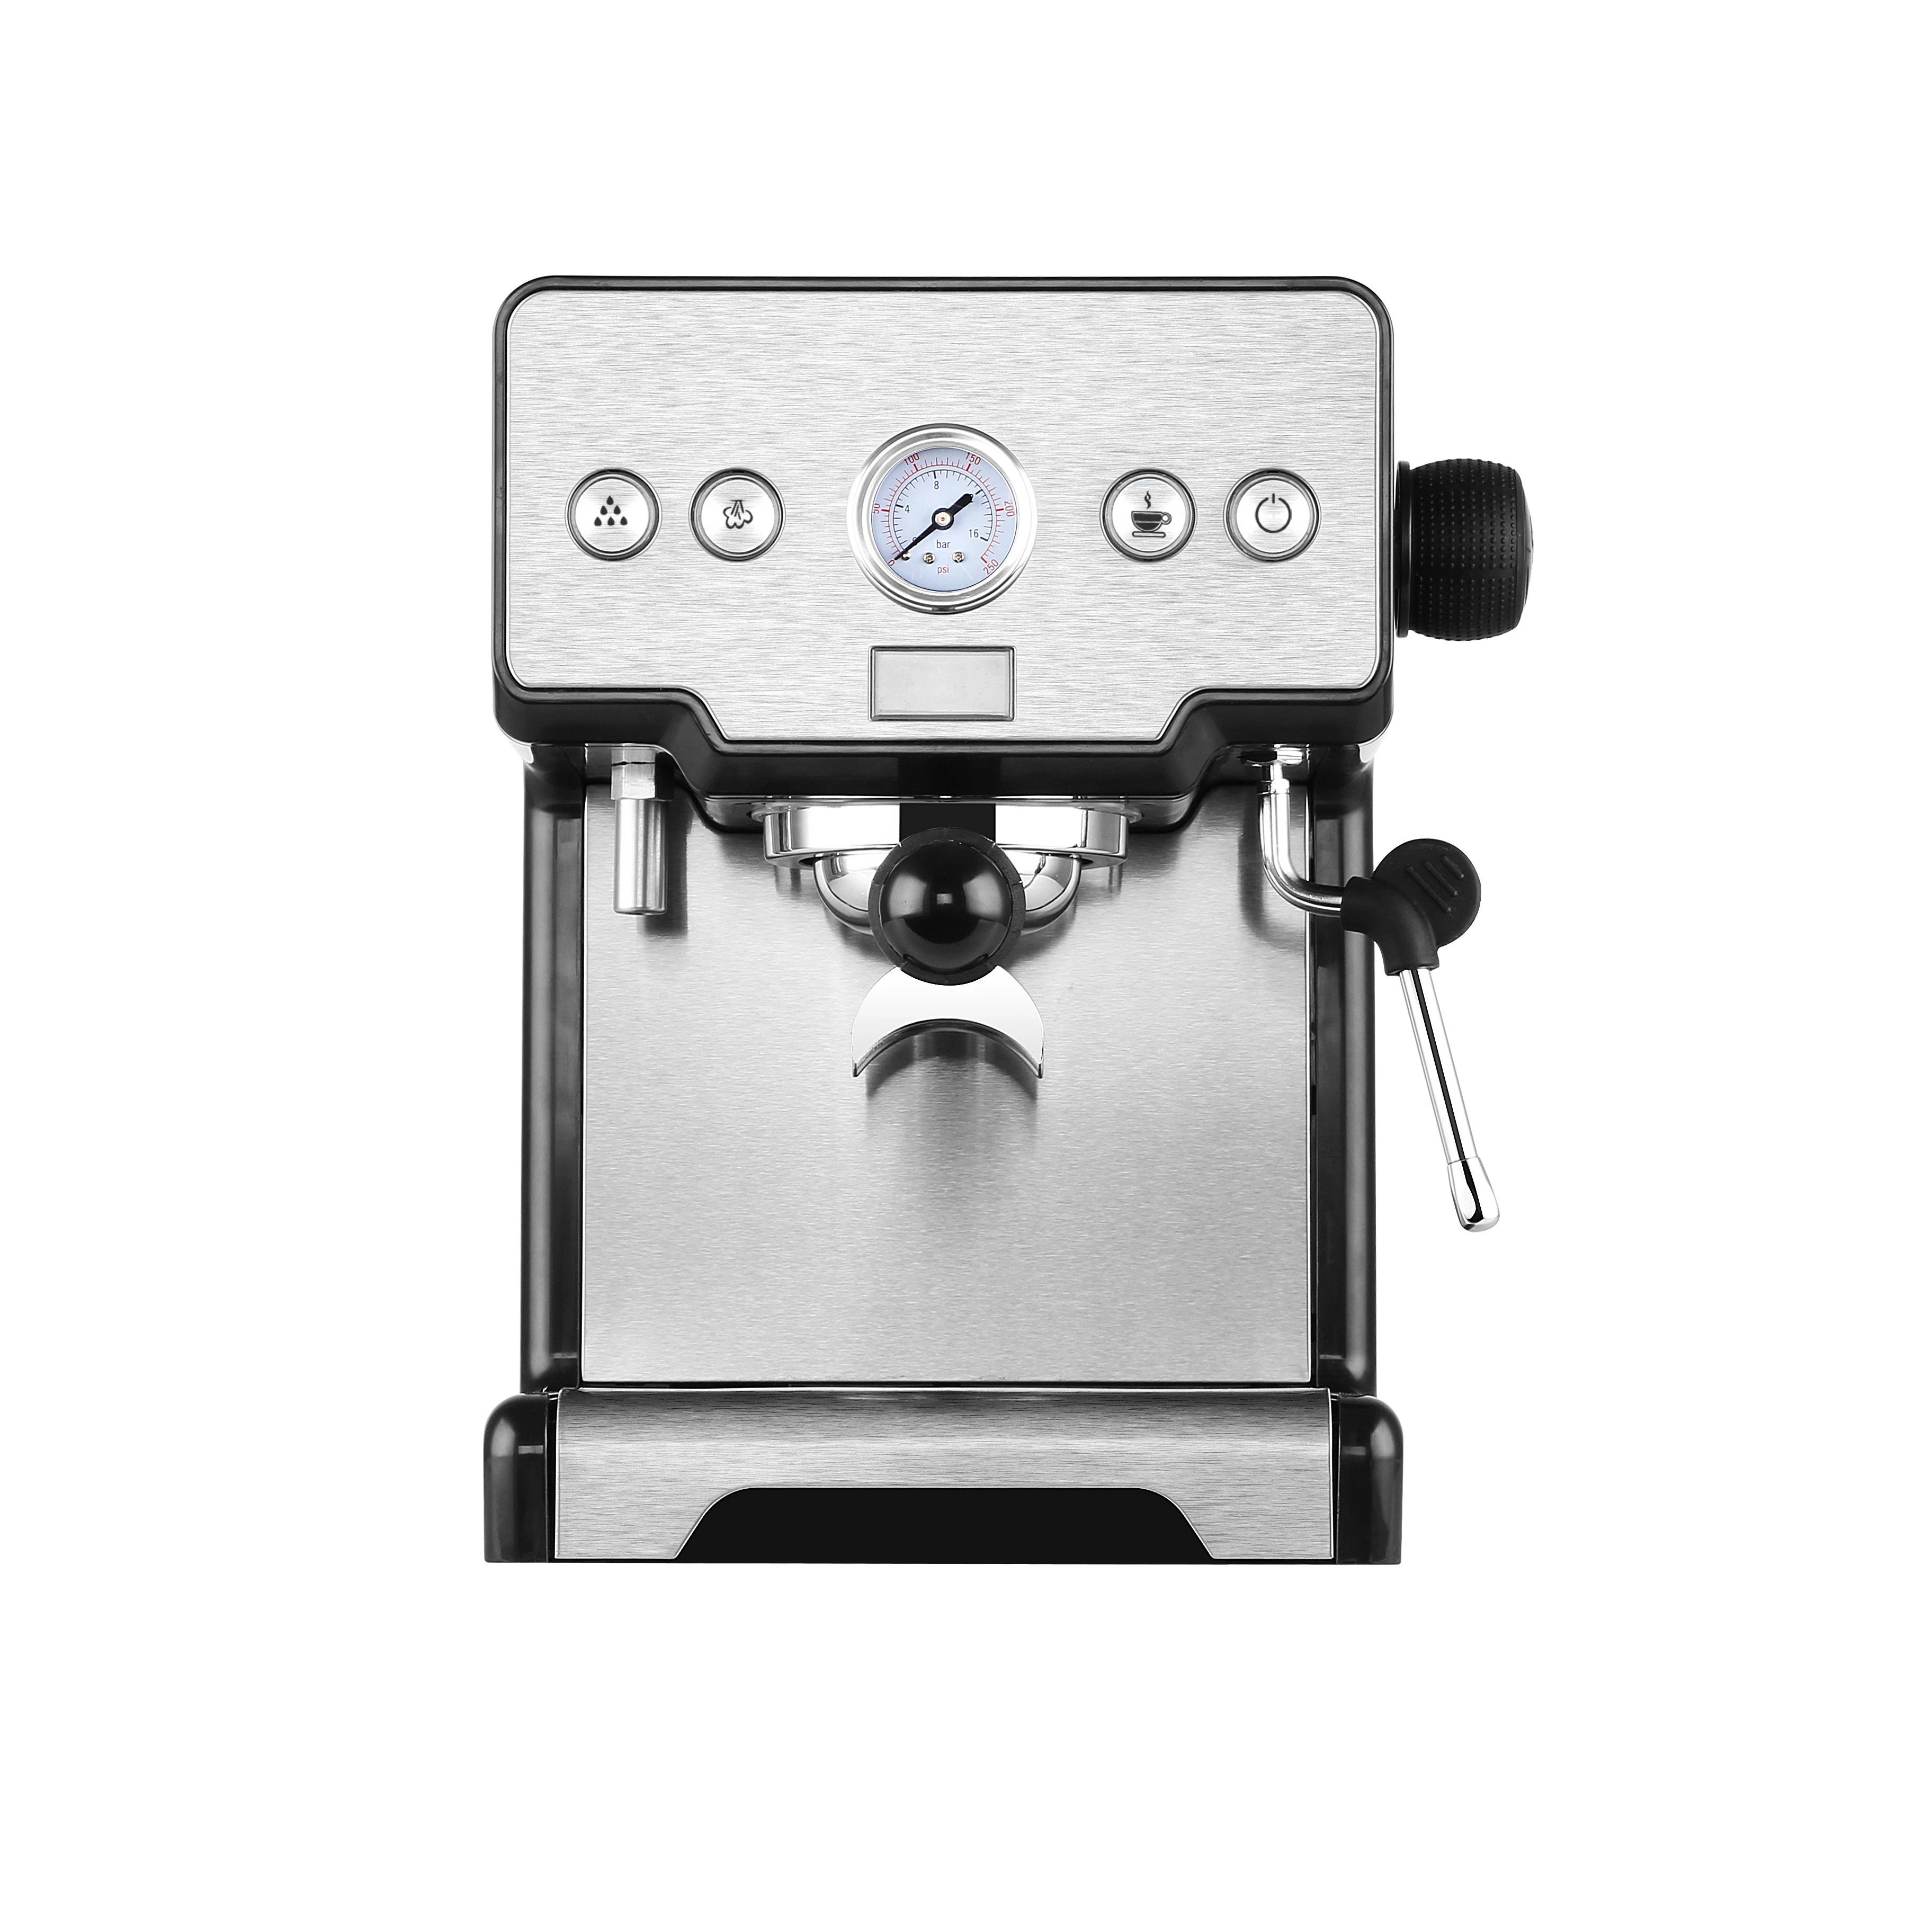 Professional Home-use 15 BAR Espresso Coffee Machine CRM3605